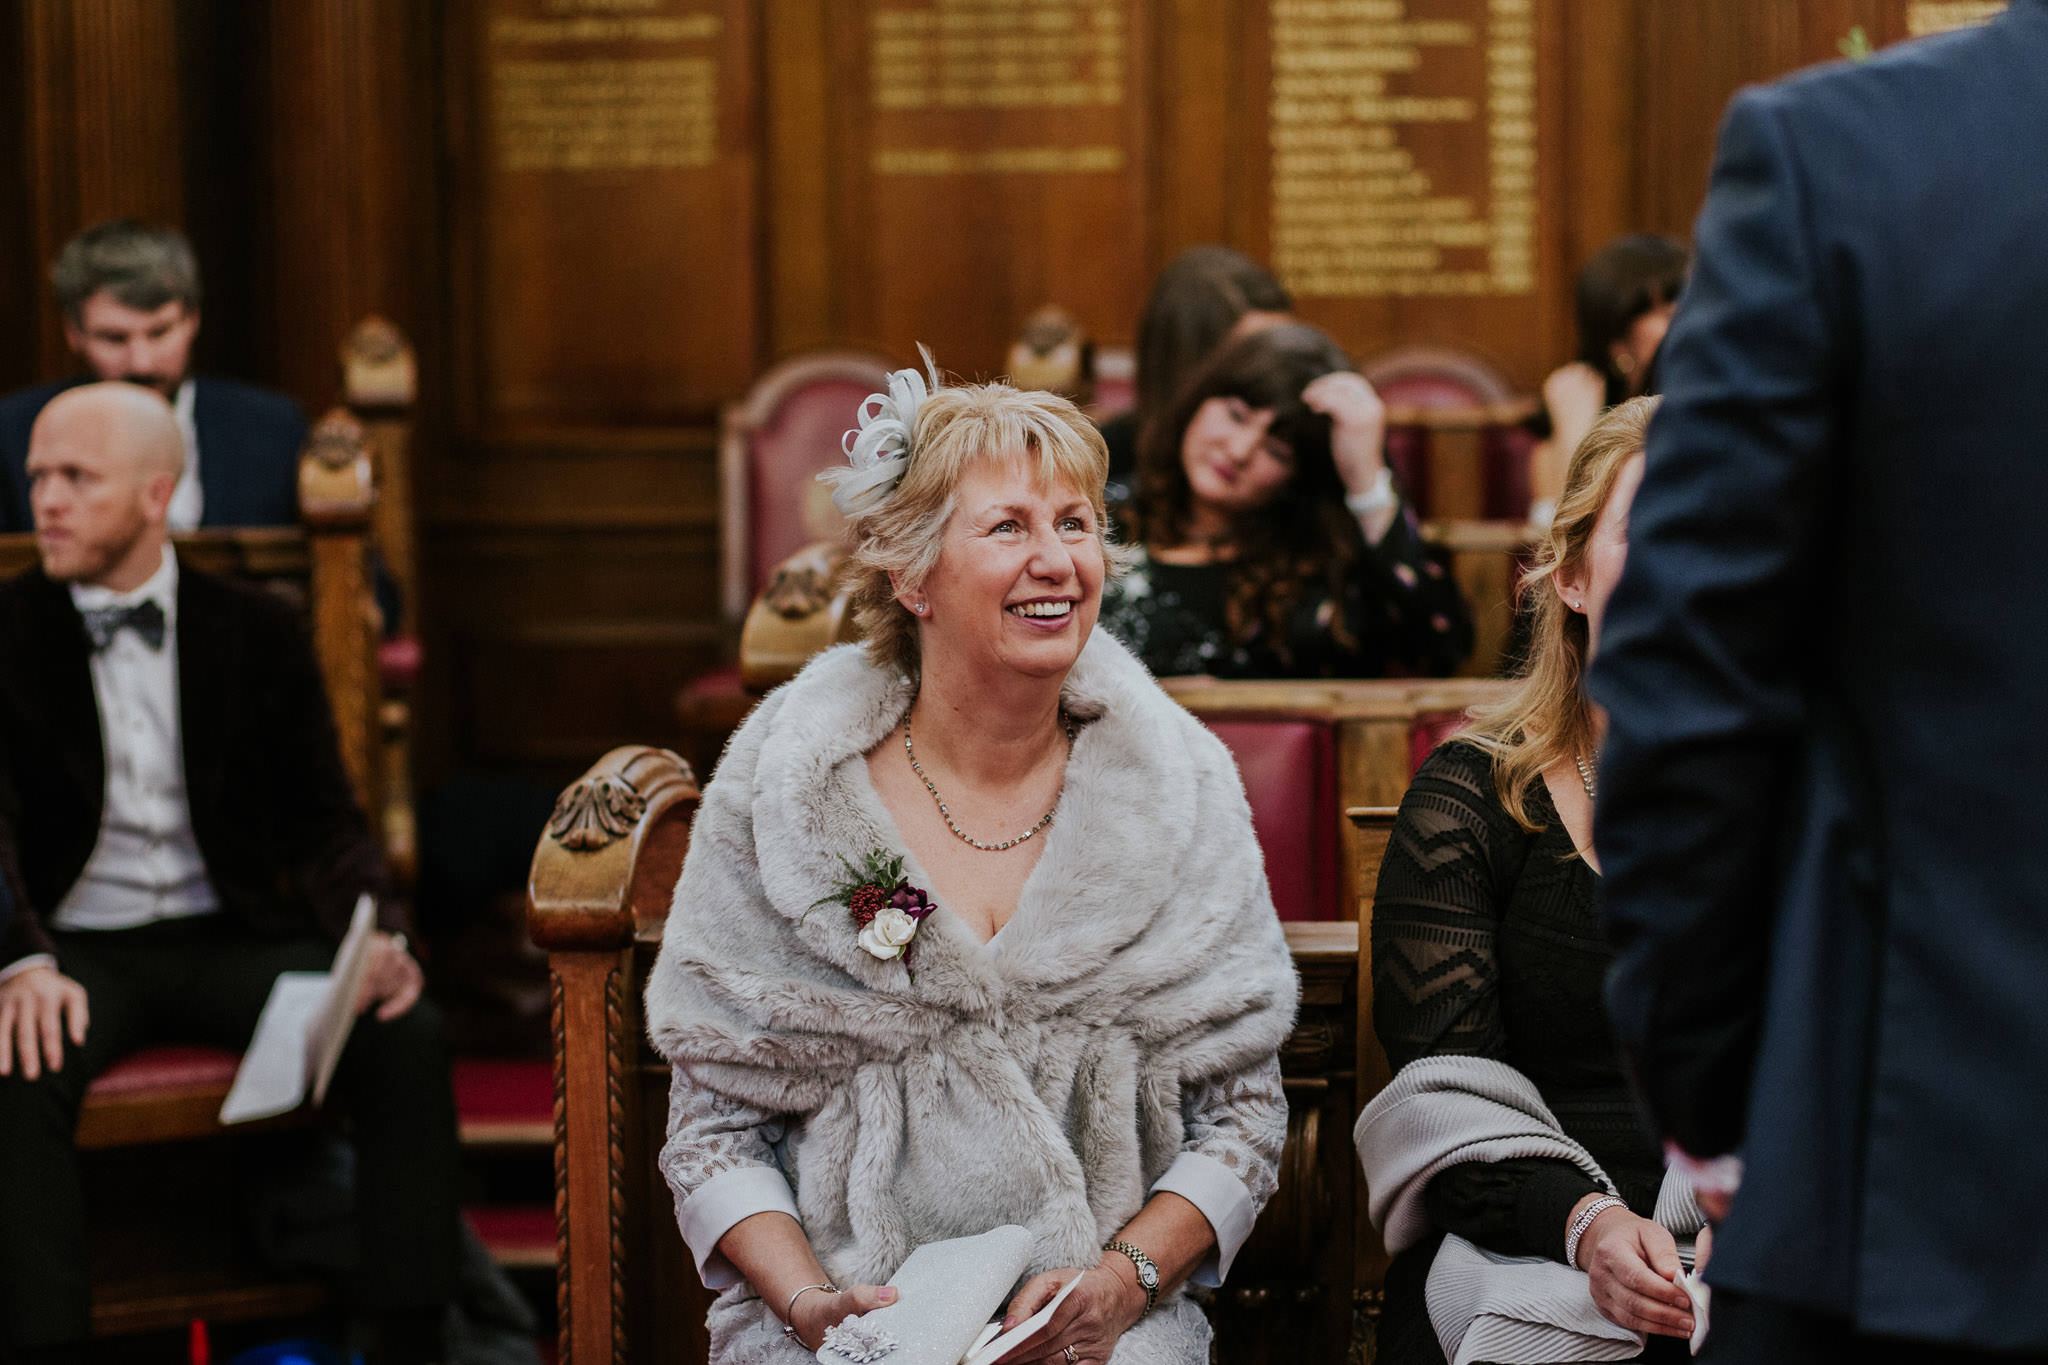 Islington Town Hall Wedding Photographer